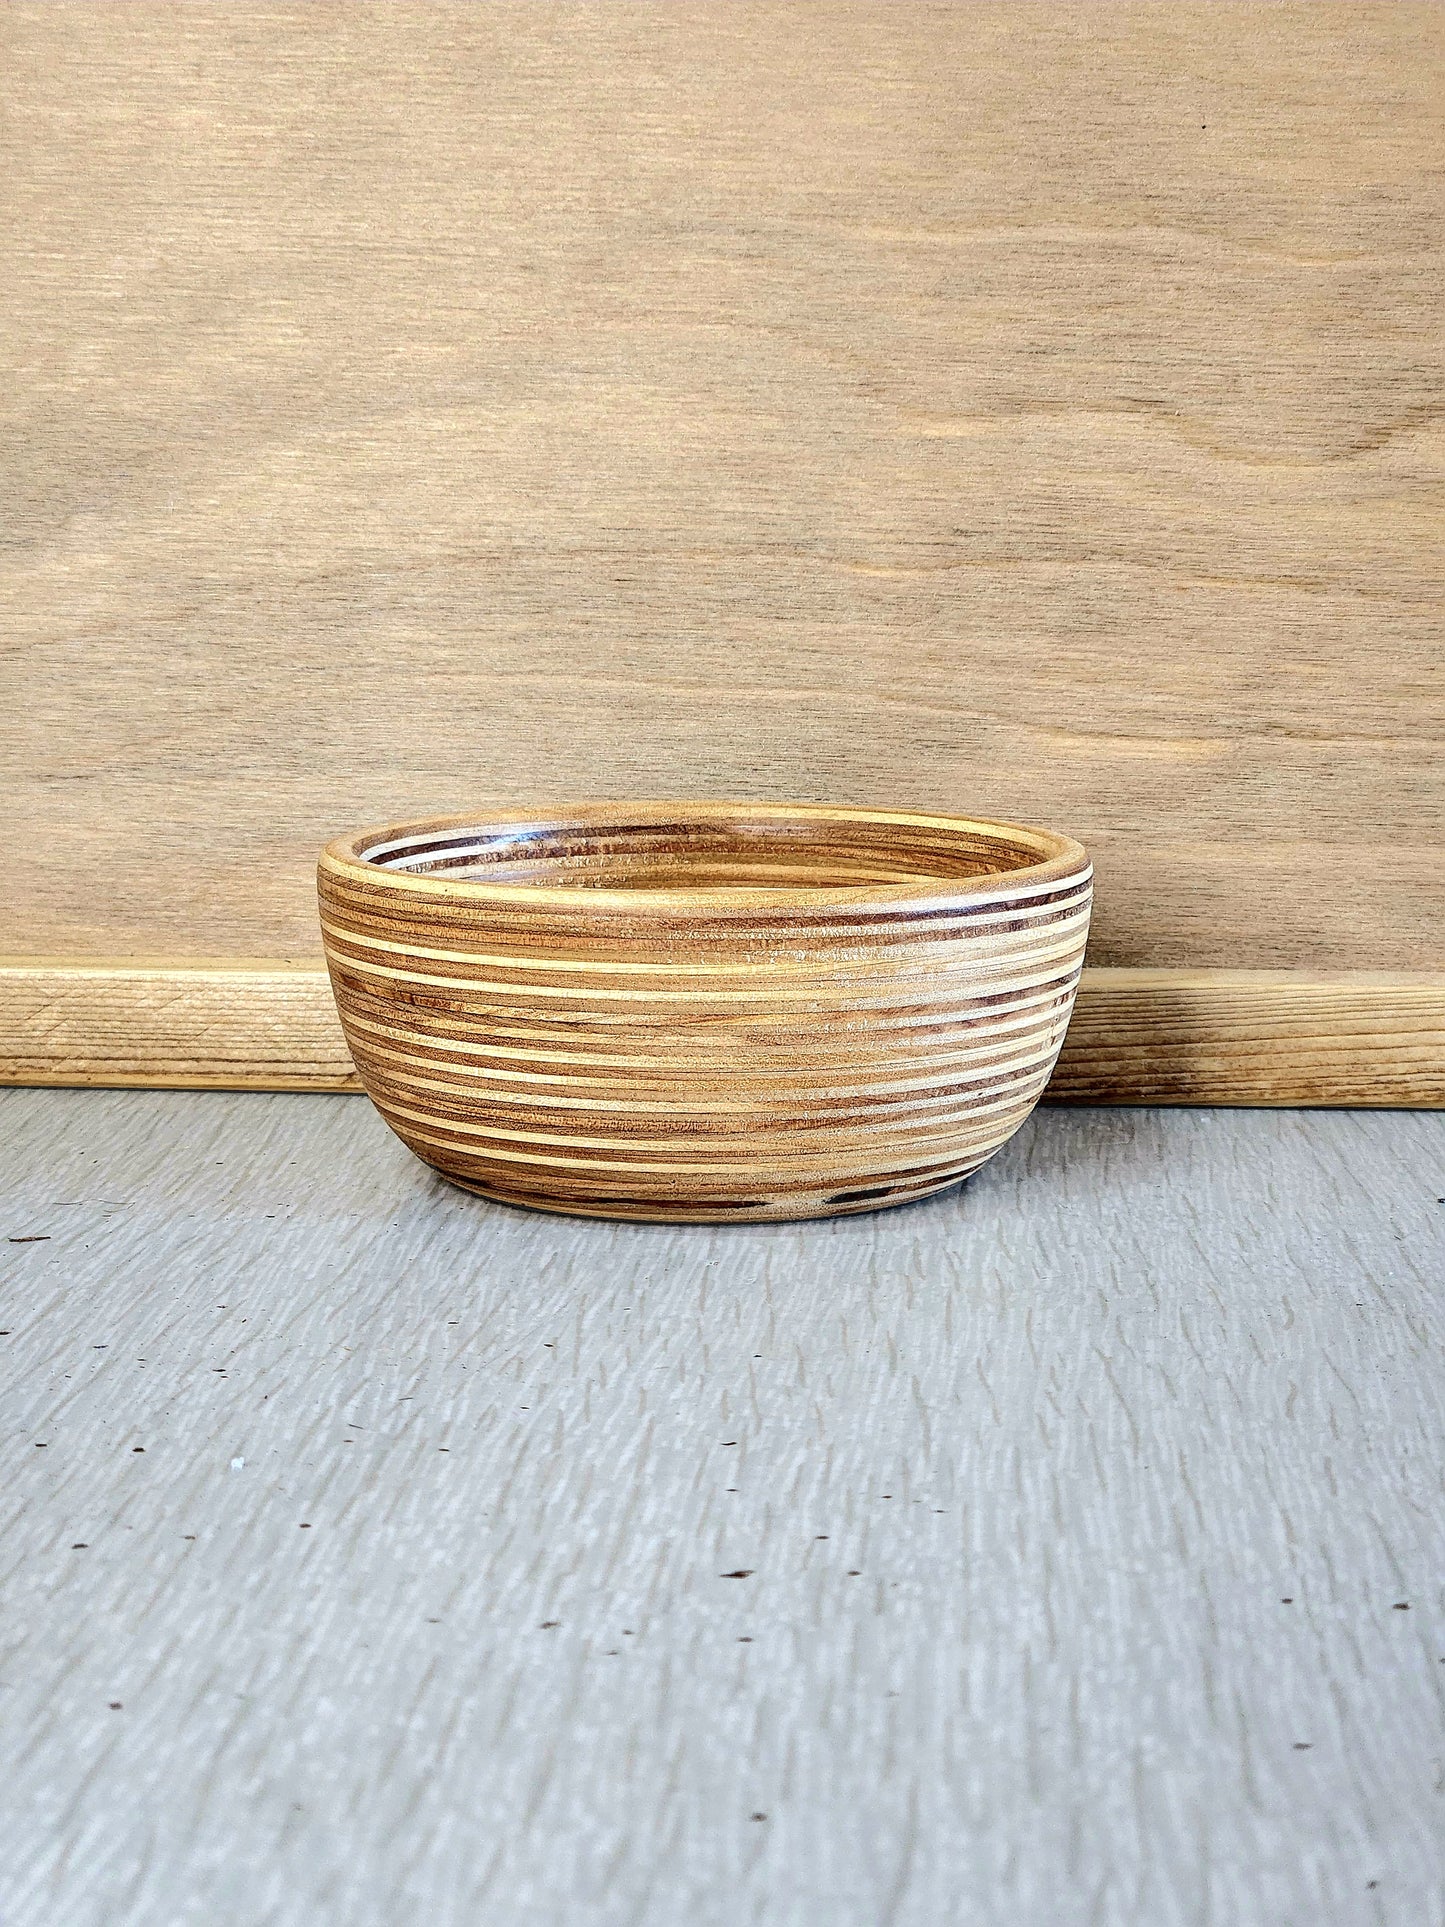 Small Wooden Bowls - Variety